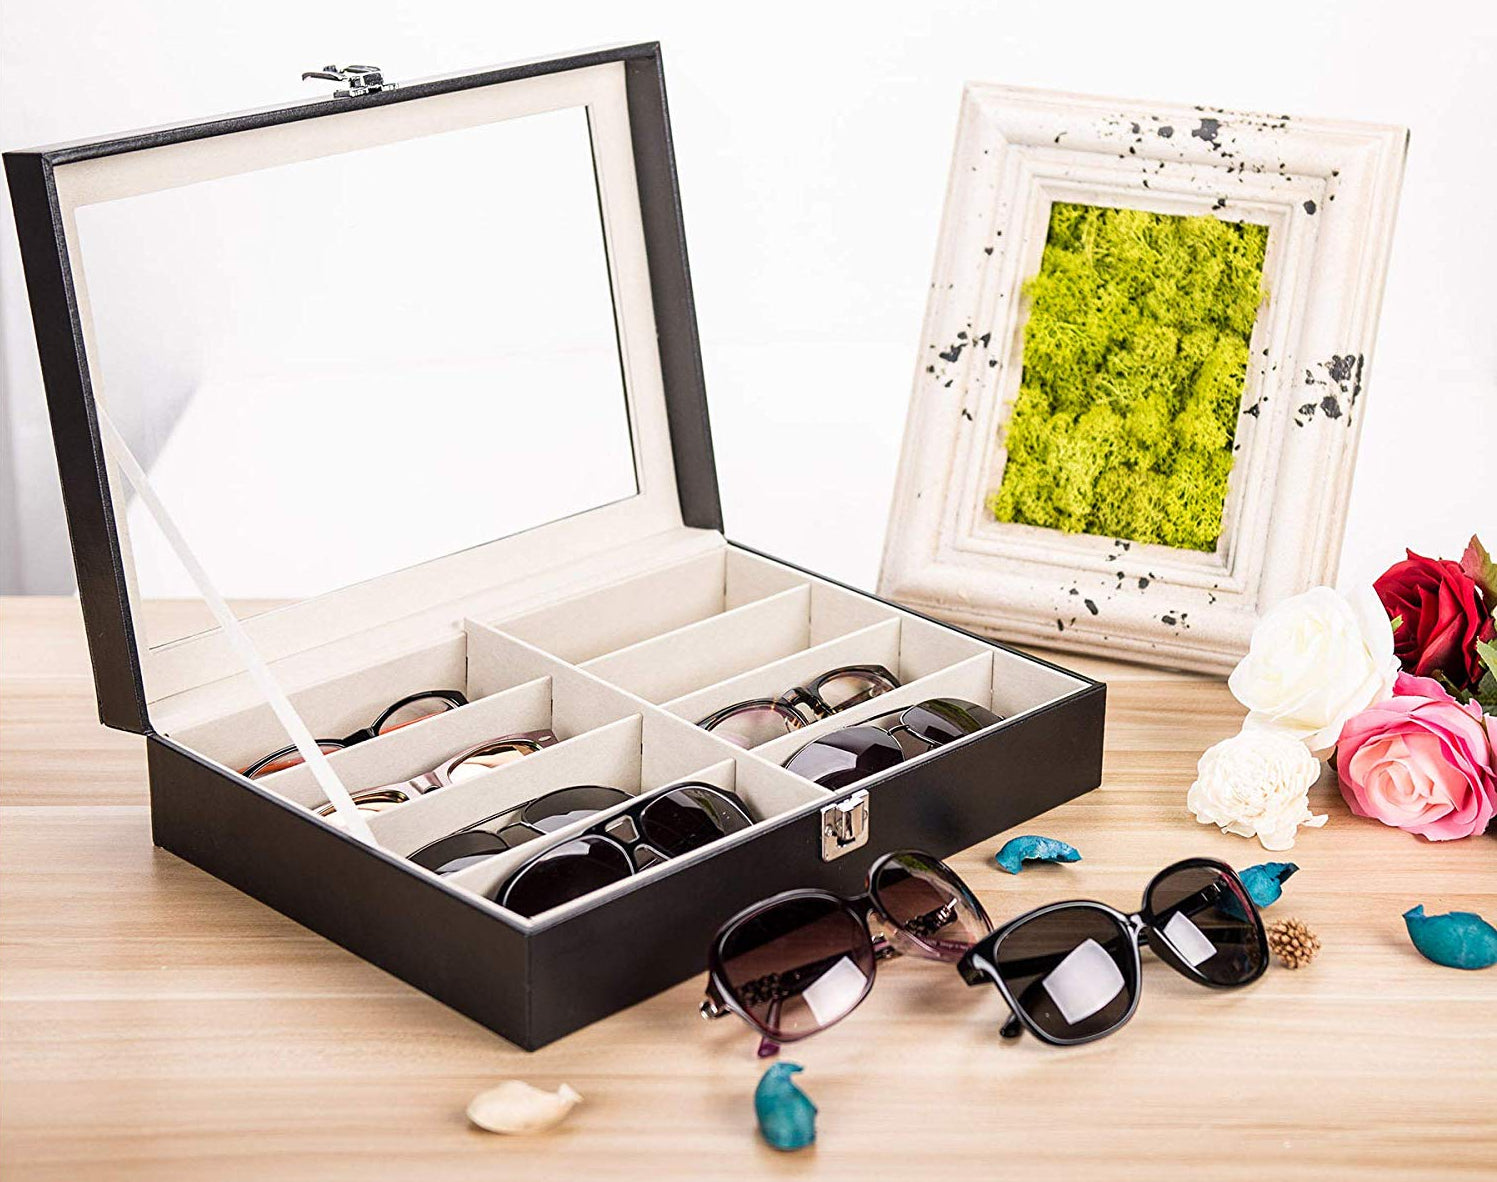 Sunglasses Case Organizer Eyeglasses Storage Box - The Shopsite